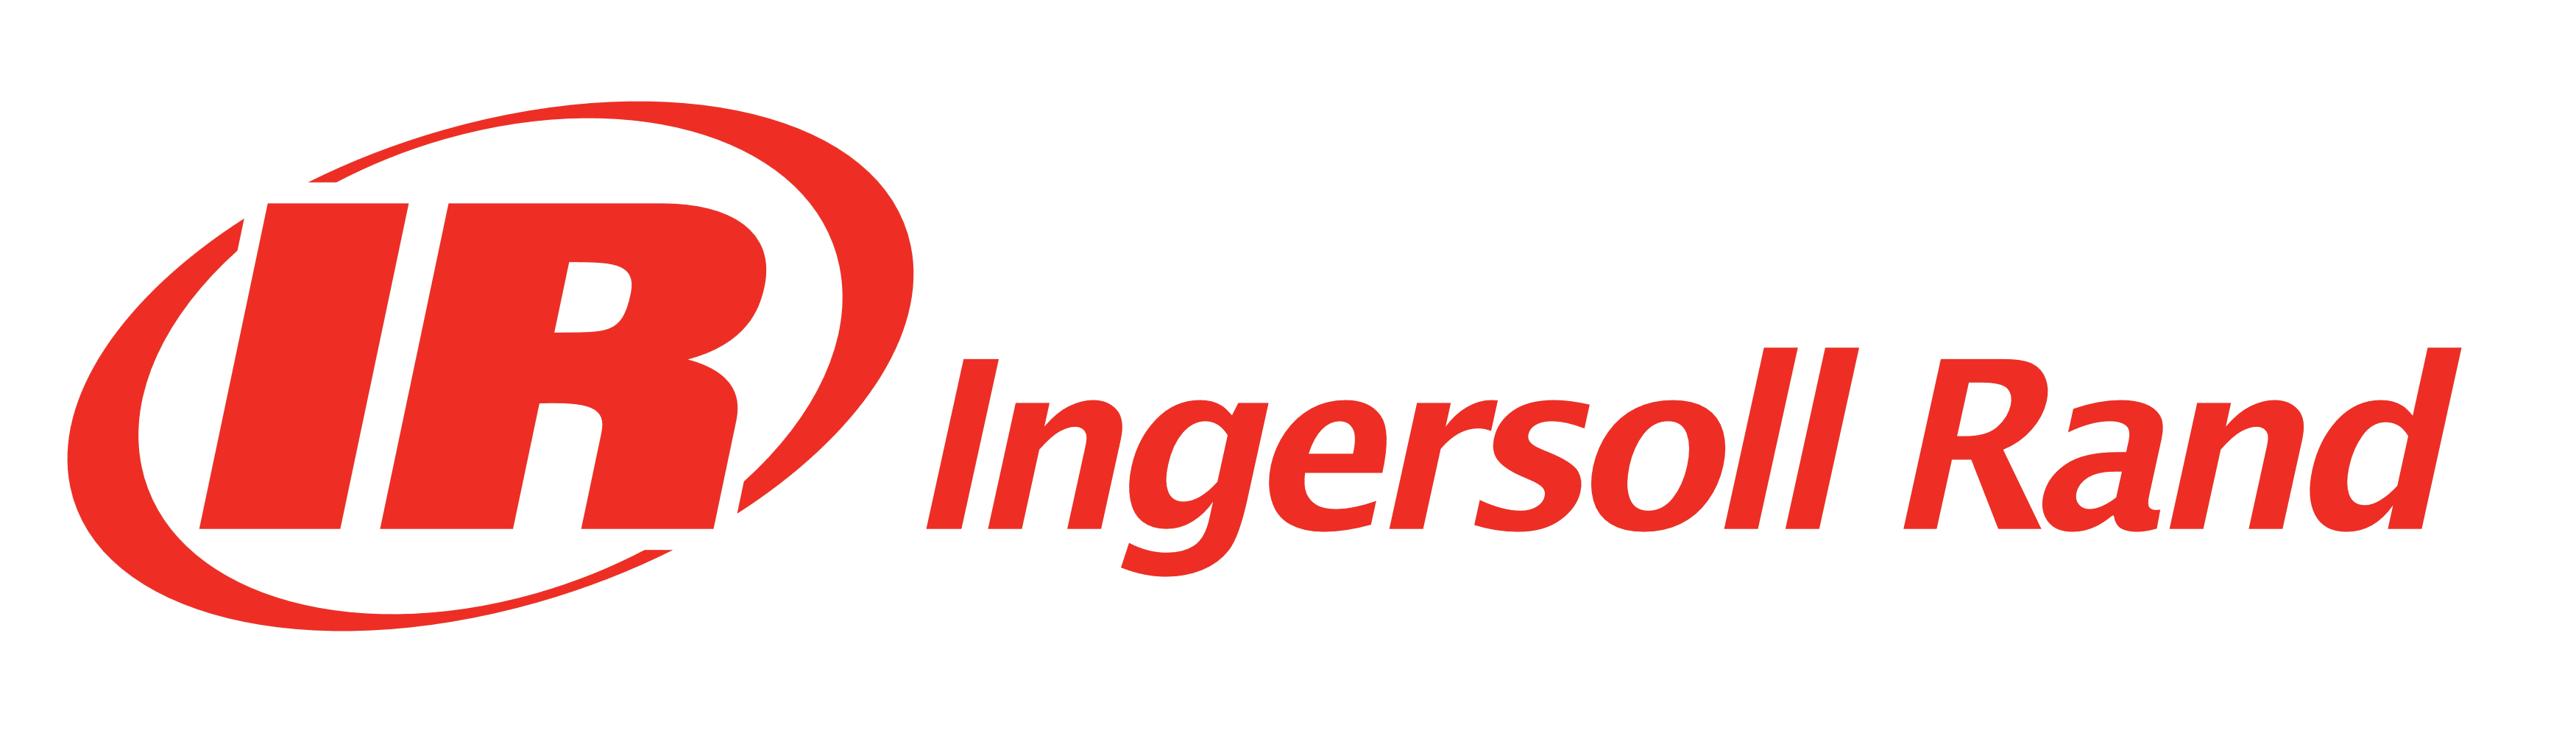 Ingersoll_Rand_logo_logotype